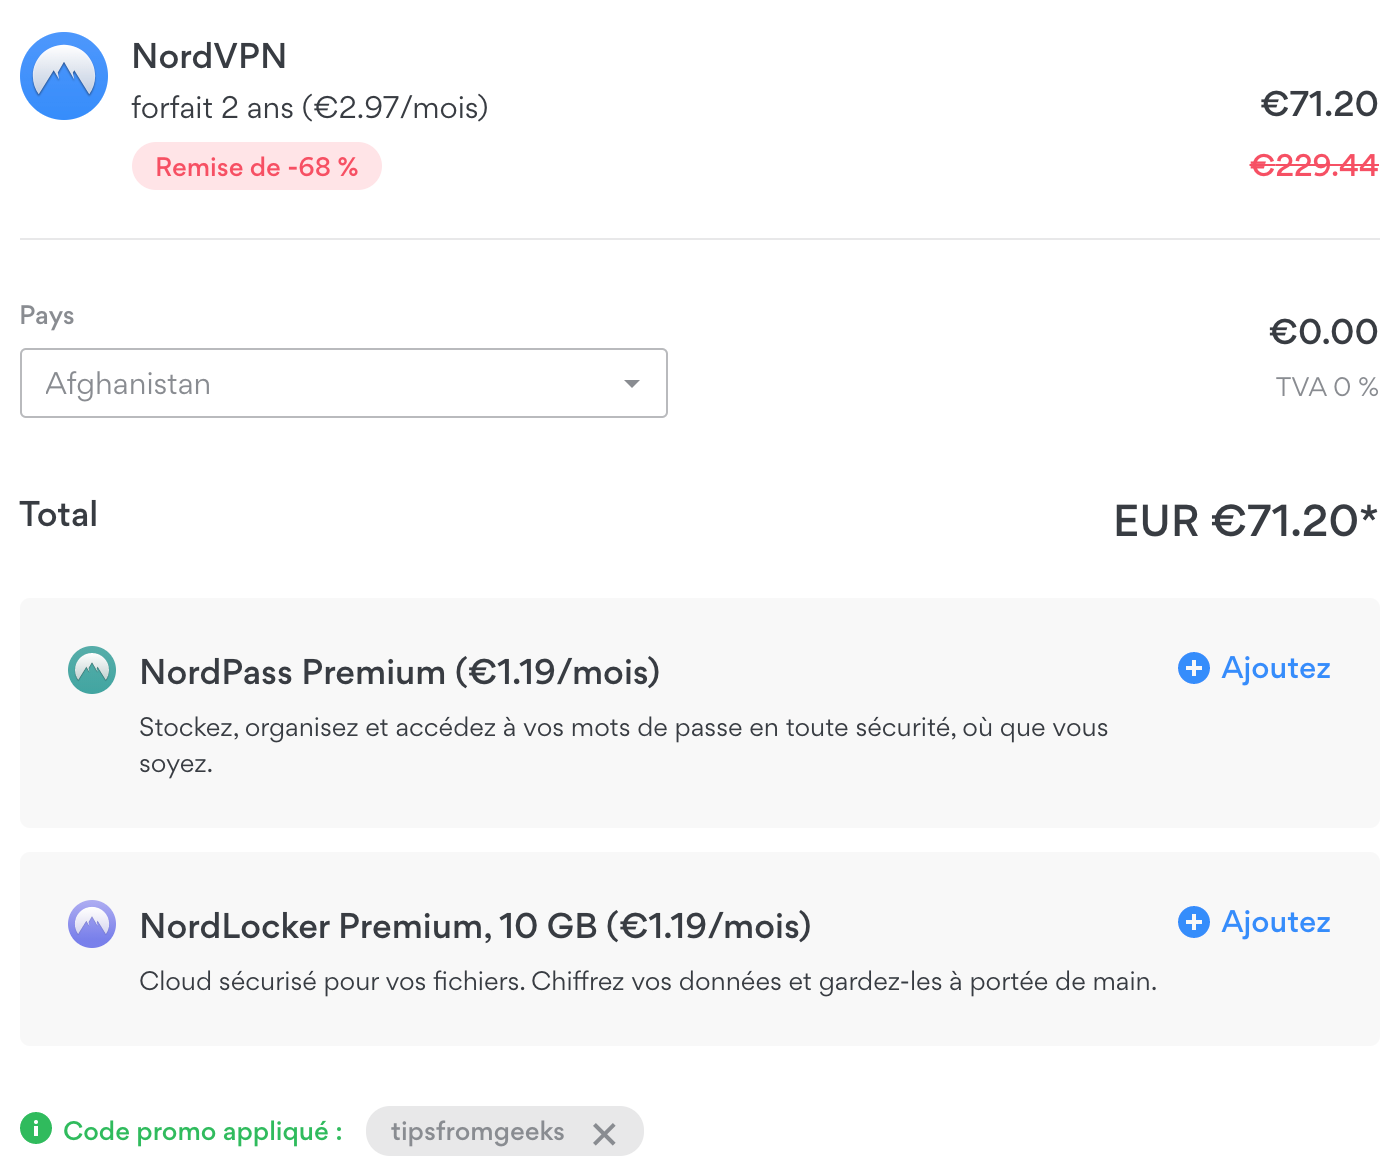 NordVPN à 79.20€ avec le code promo tipsfromgeeks.